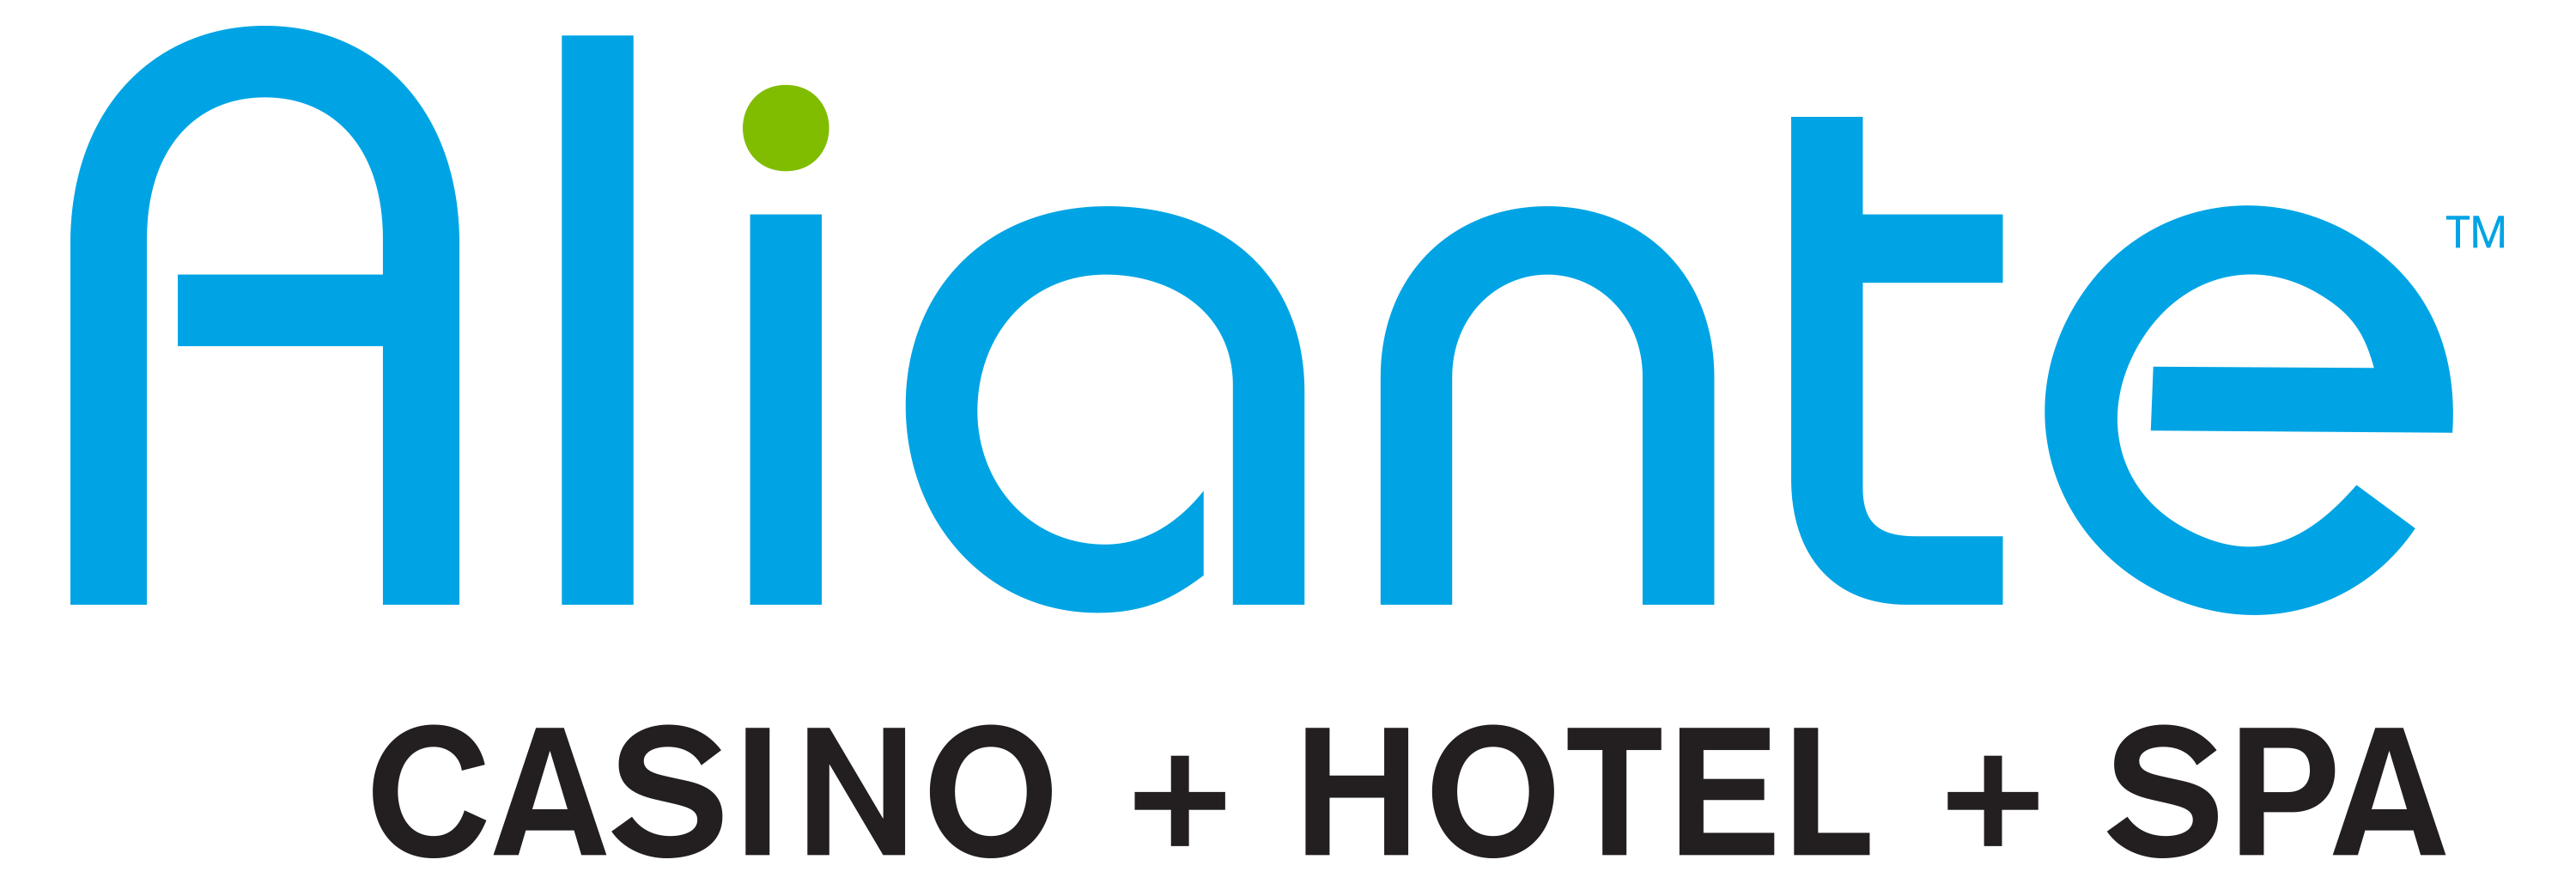 aliante casino and hotel reviews